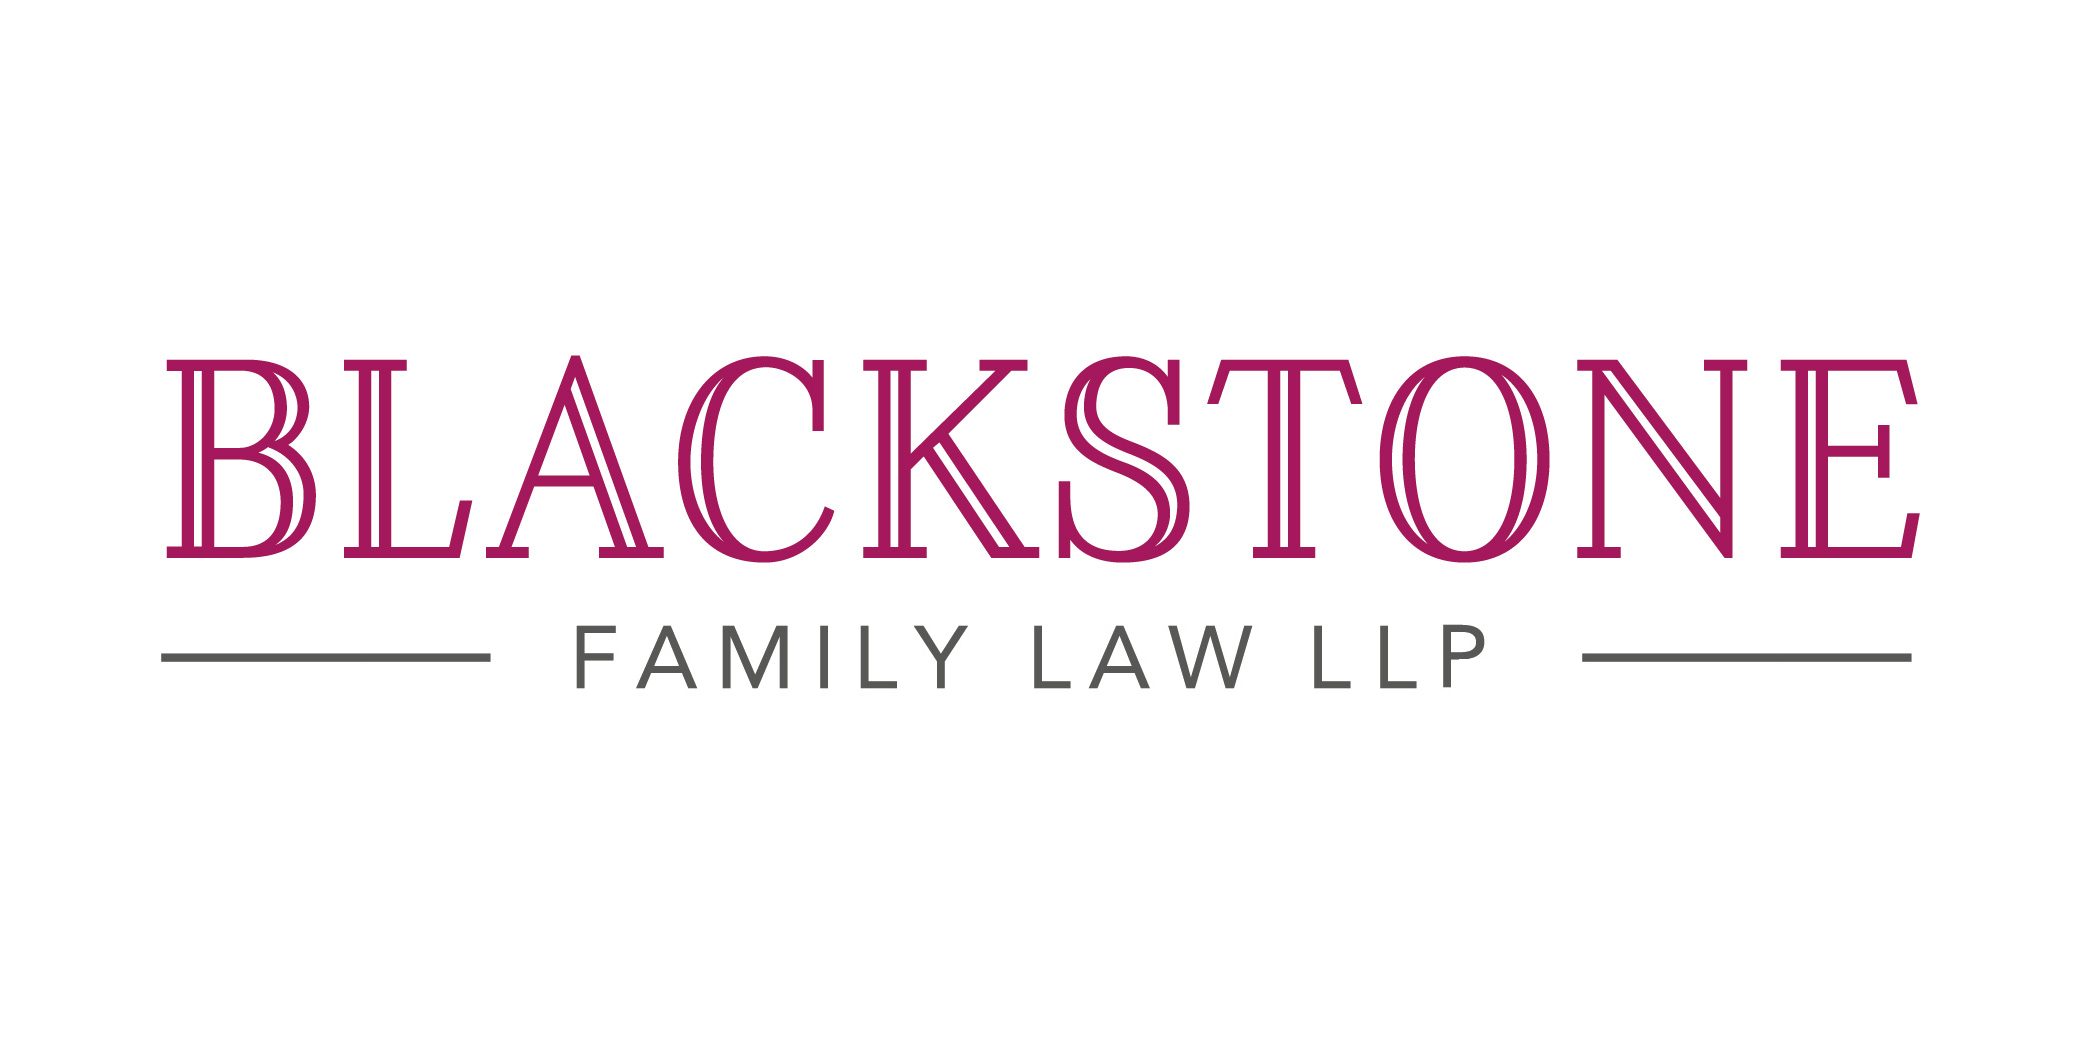 Blackstone Family Law LLP Logo